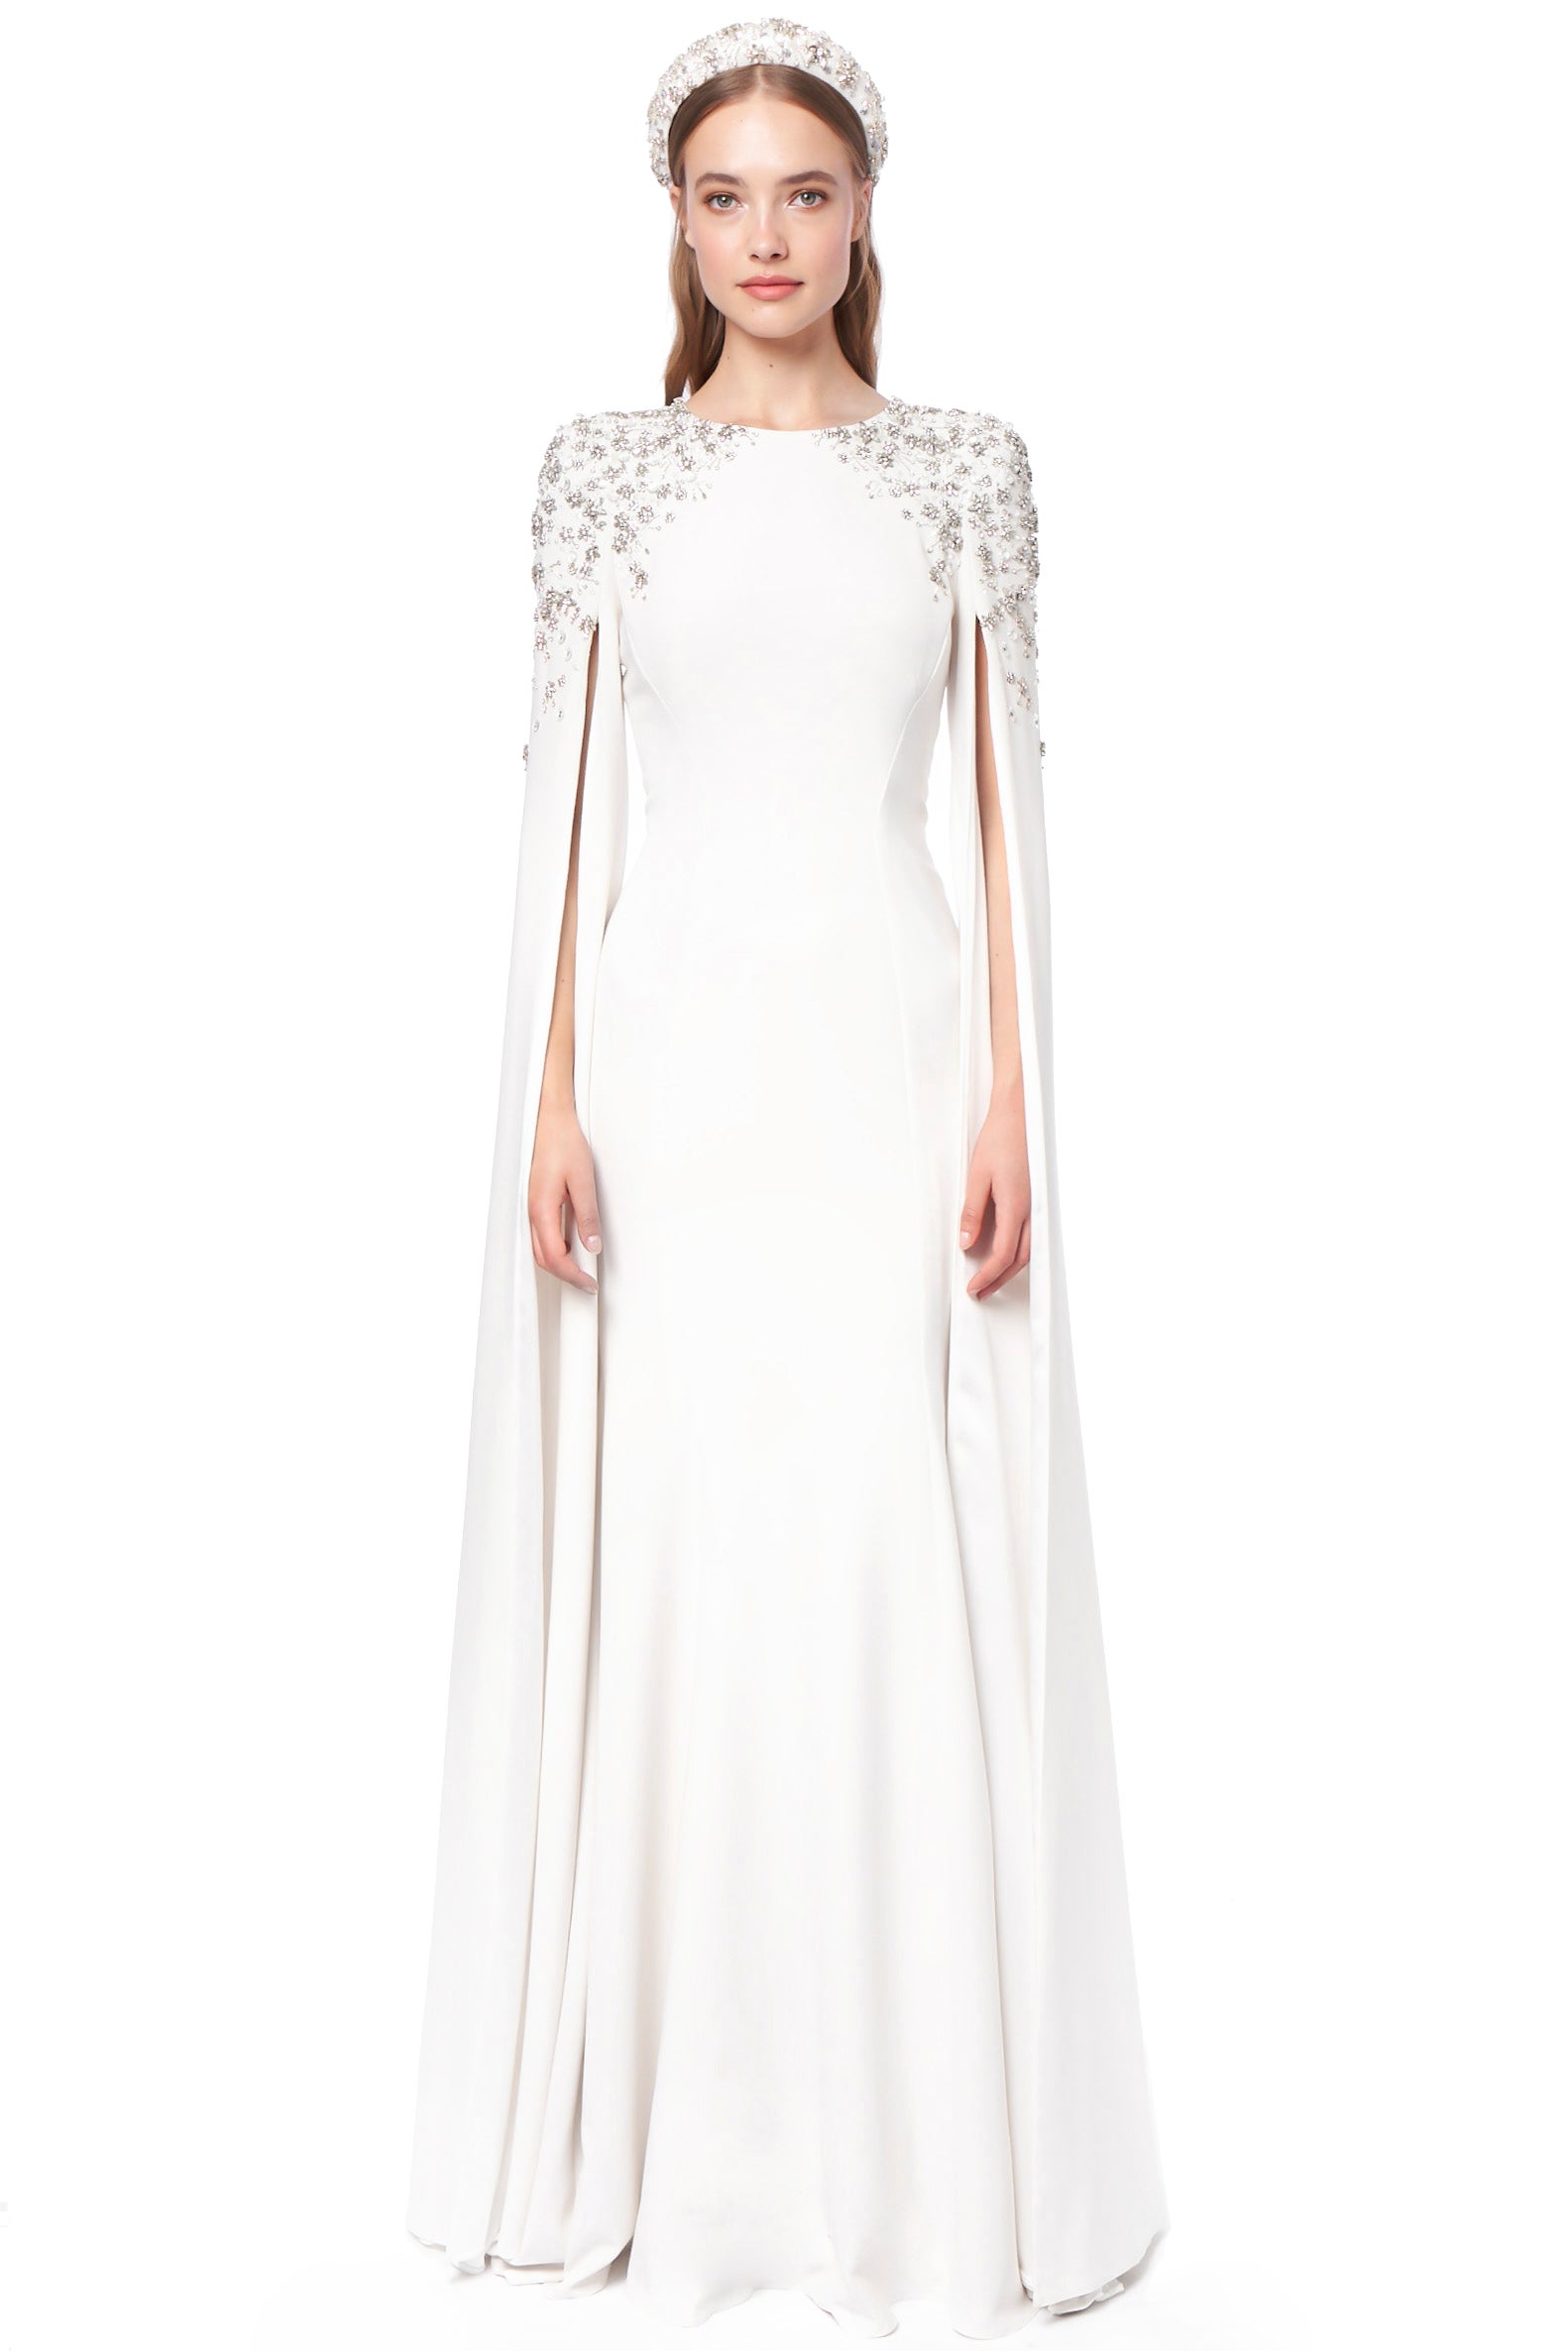 The 13 Best Bell Sleeve Wedding Dresses of 2023